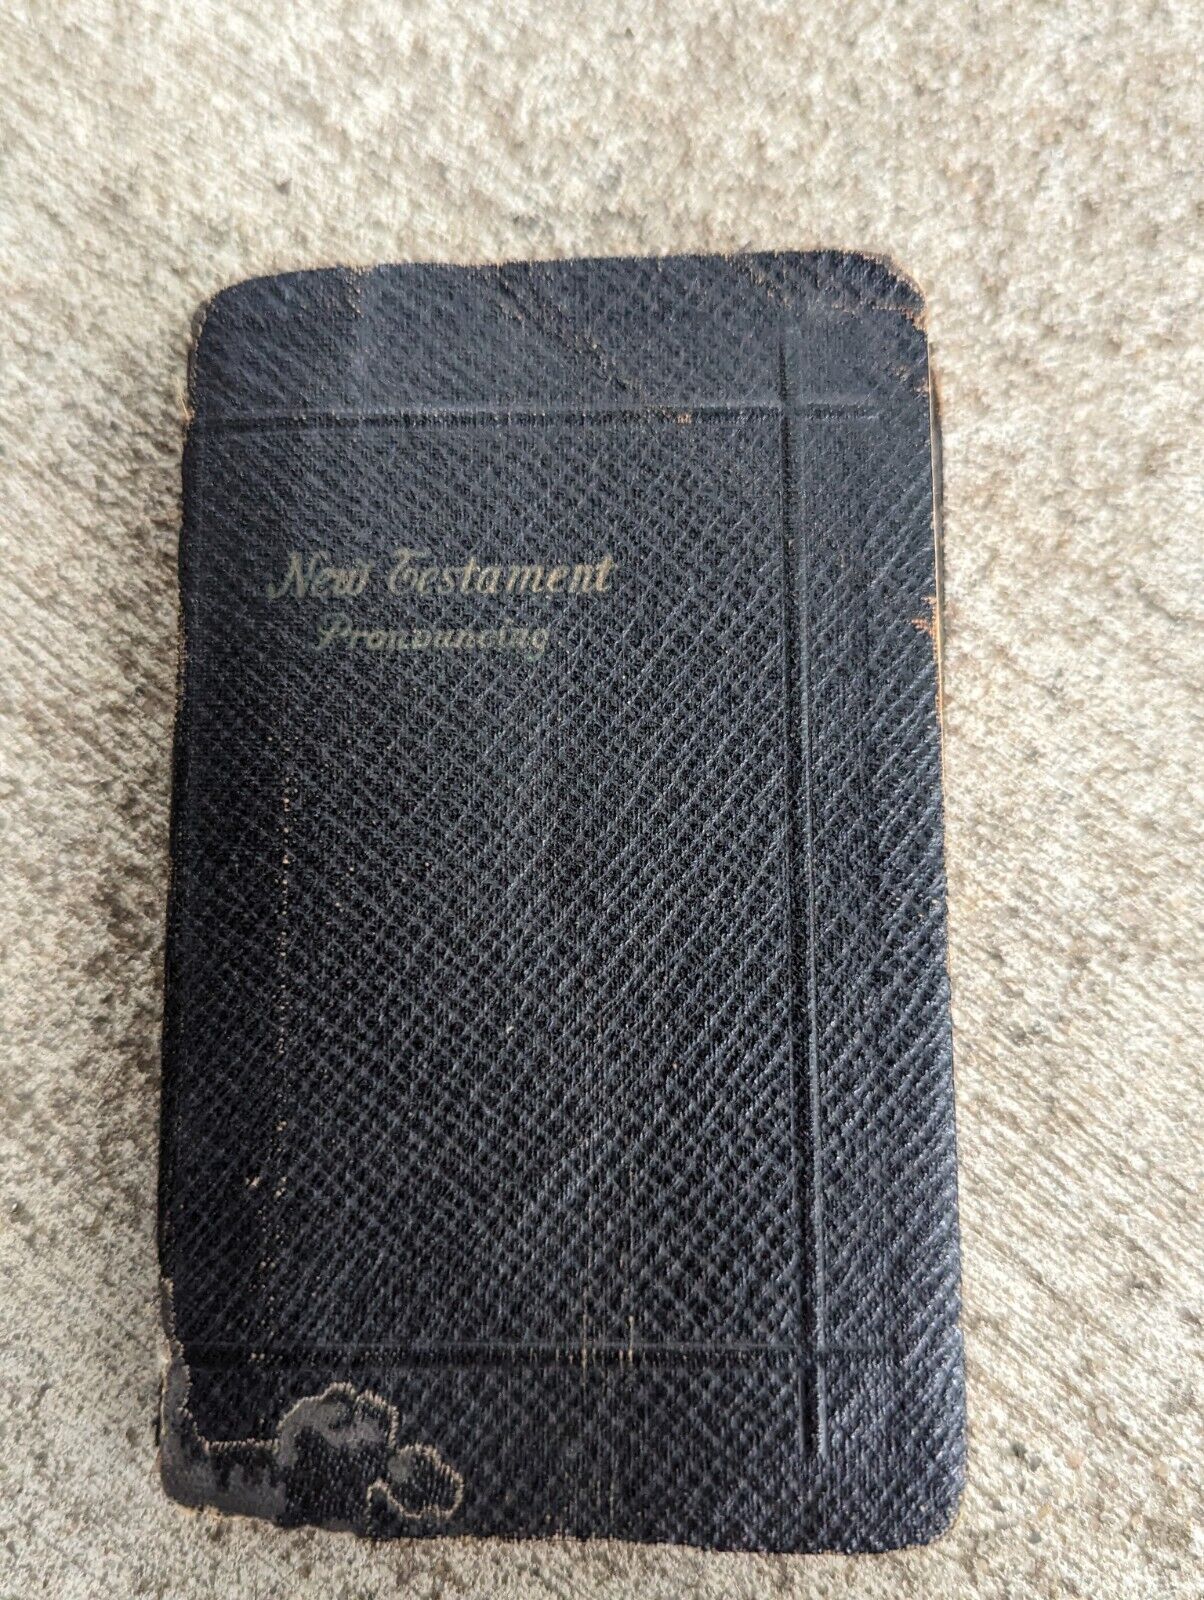 Holman Bible From 1900 New Testament Small Format Pocket Bible Lynchburg VA